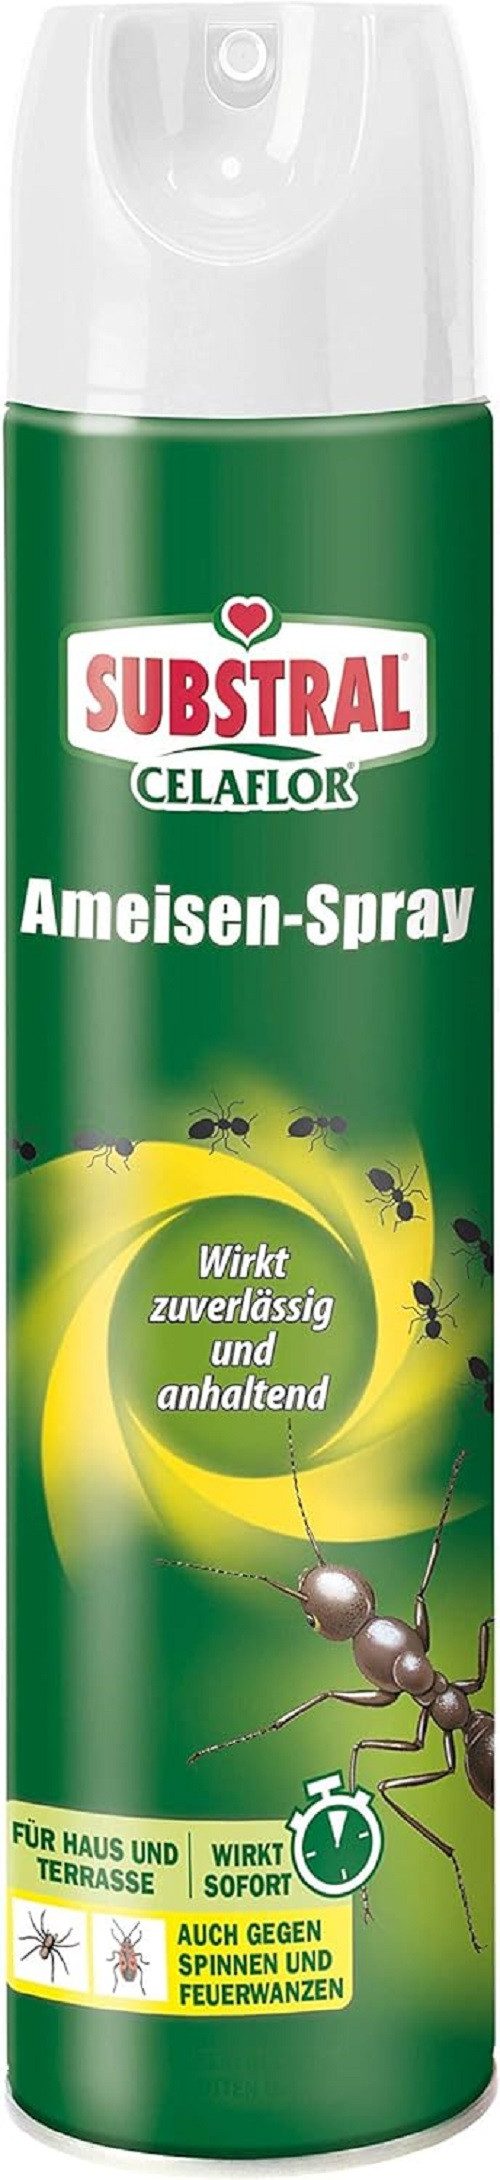 Evergreen Insektenspray Substral Celaflor Ameisenspray 400ml